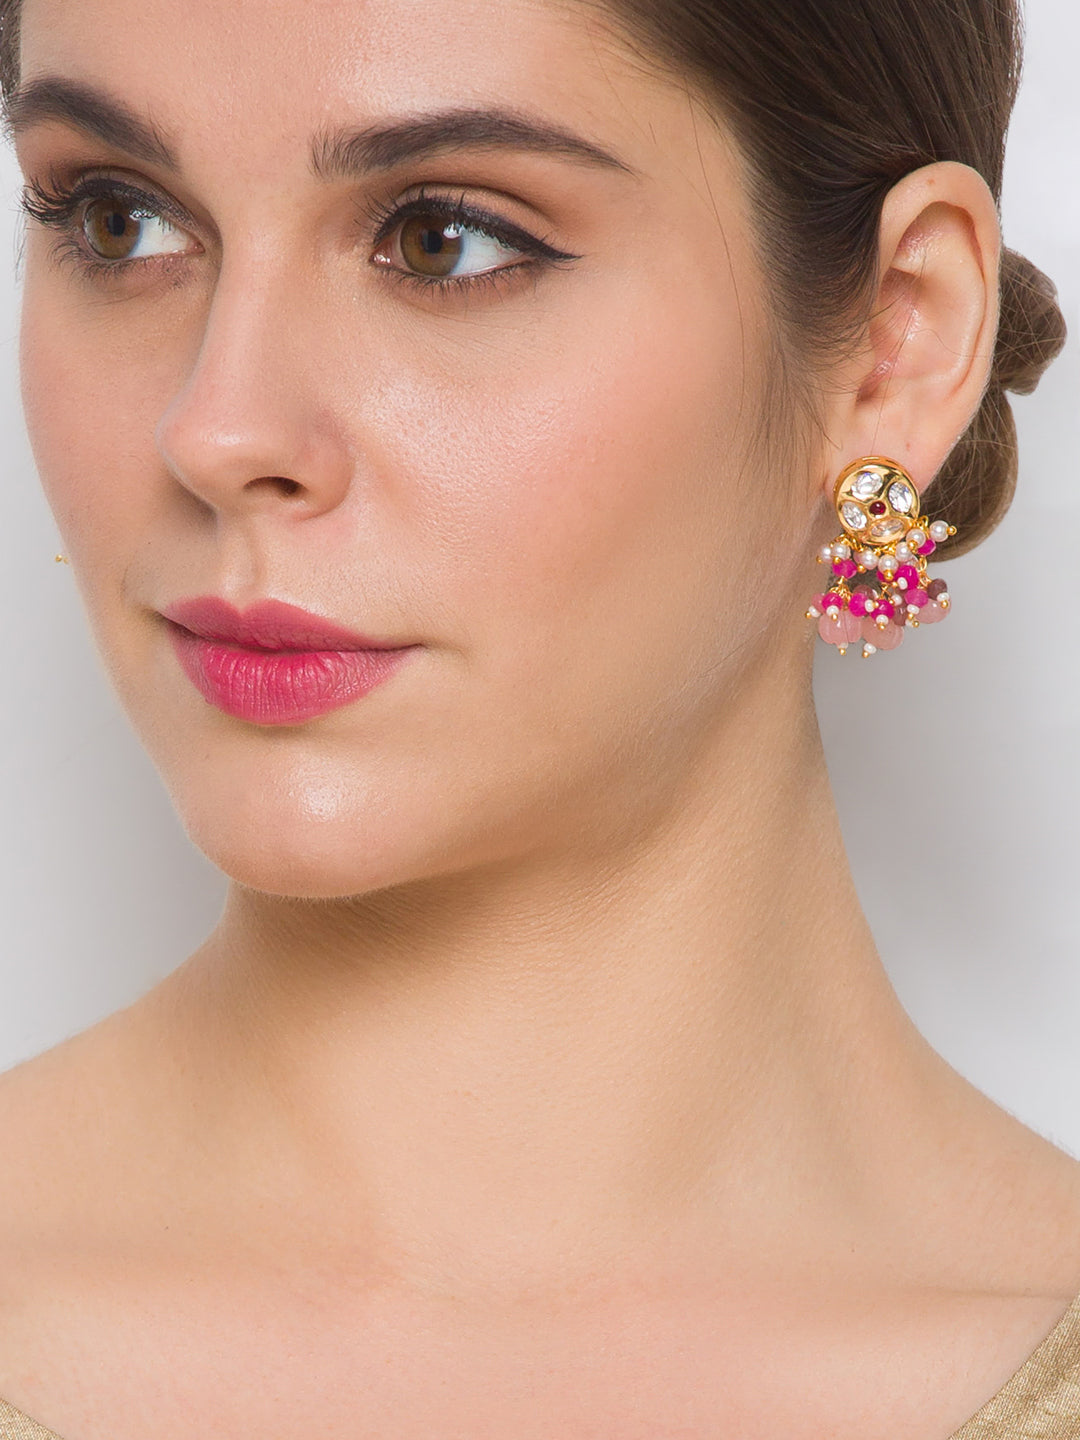 Golden Polished Necklace with Pink Kundan Polki & Onyx Wtermelon shaped Tumbles